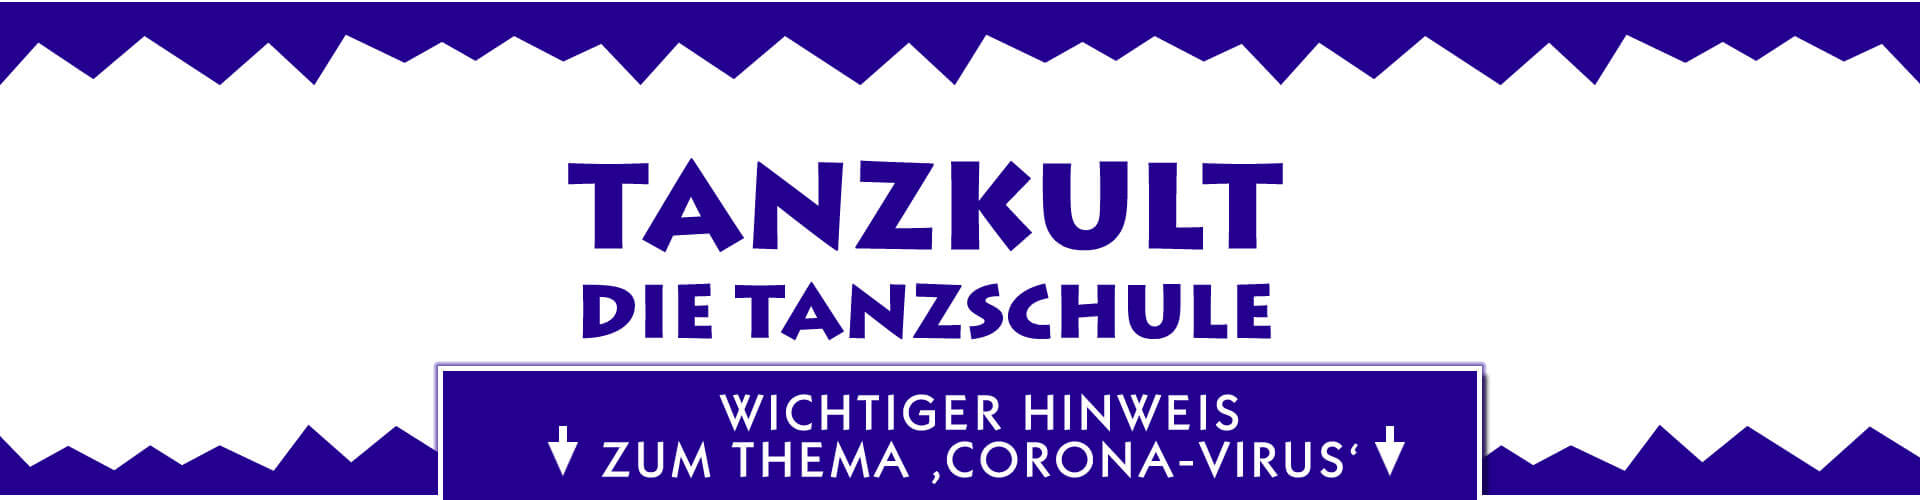 Tanzschule singles Saarland Deutschland